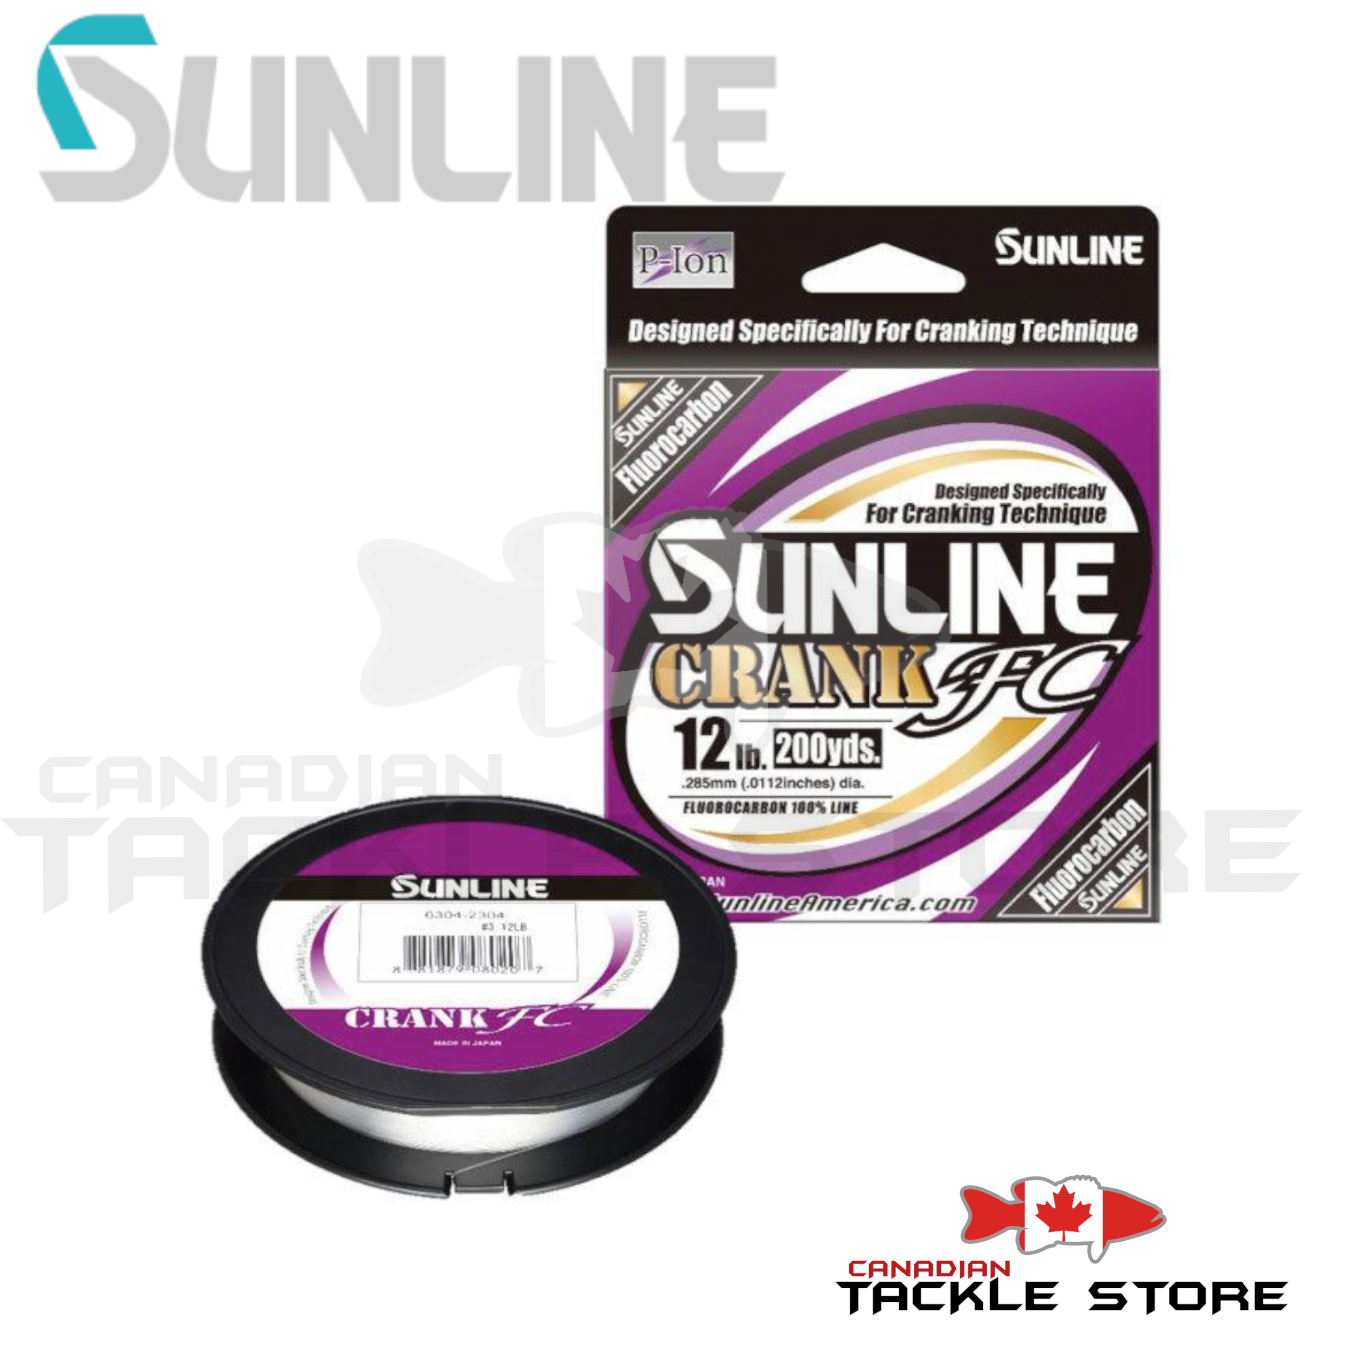 Sunline Crank FC Fluorocarbon Line – Canadian Tackle Store